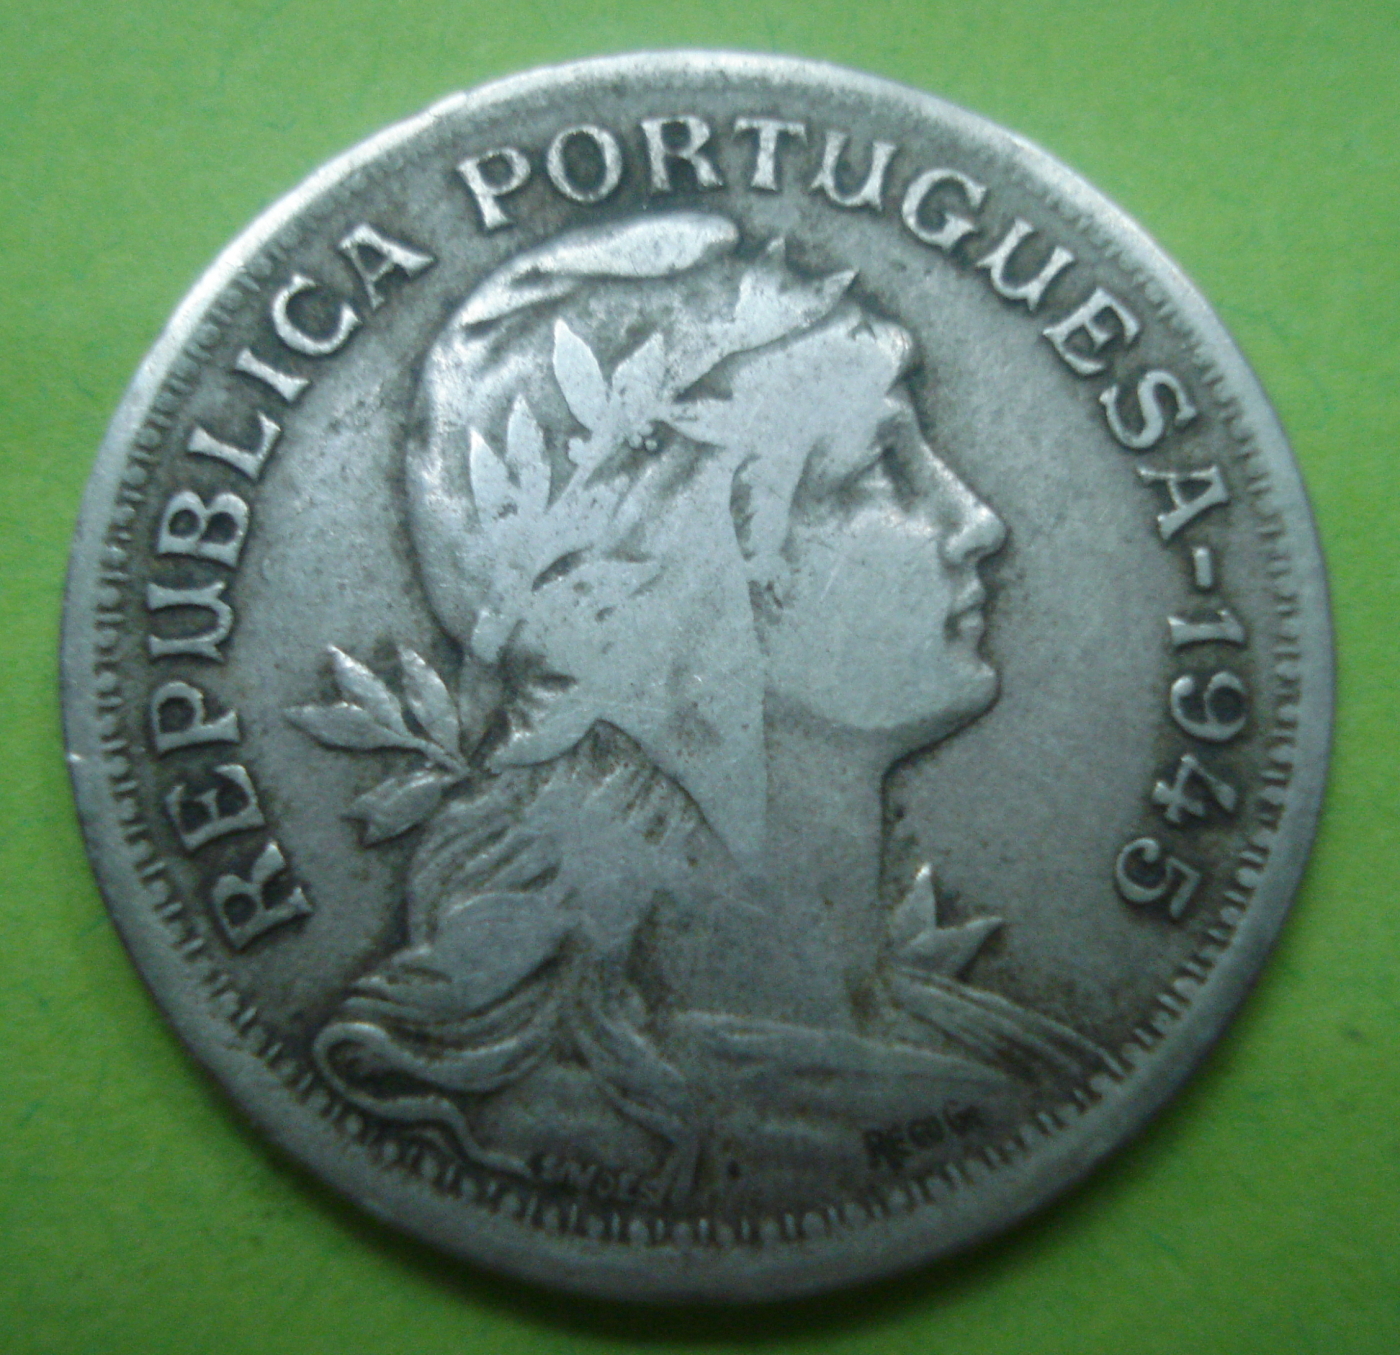 50 Centavos 1945, Republic (1910-1960) - Portugal - Coin - 36726